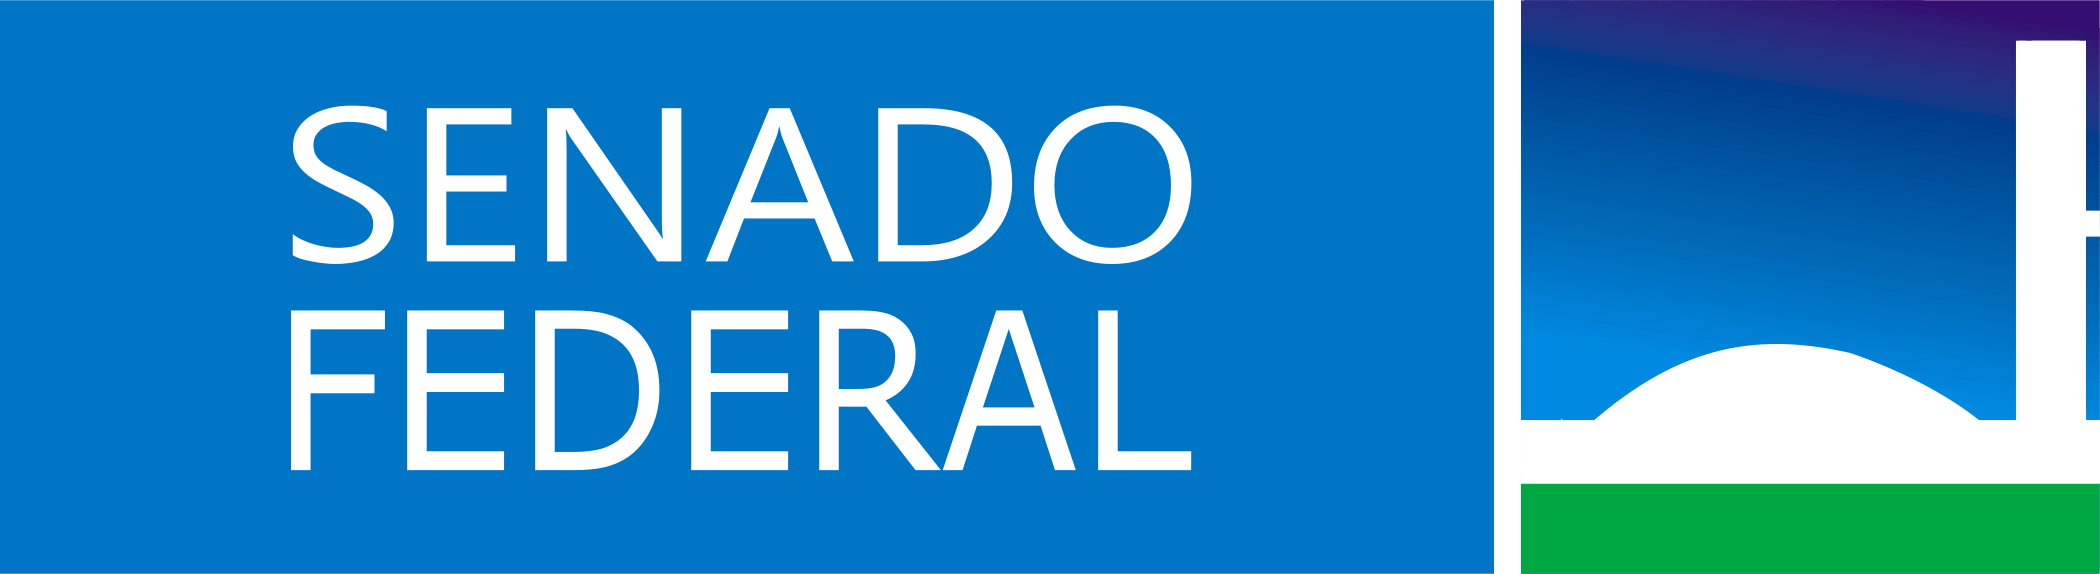 senado federal logo 1